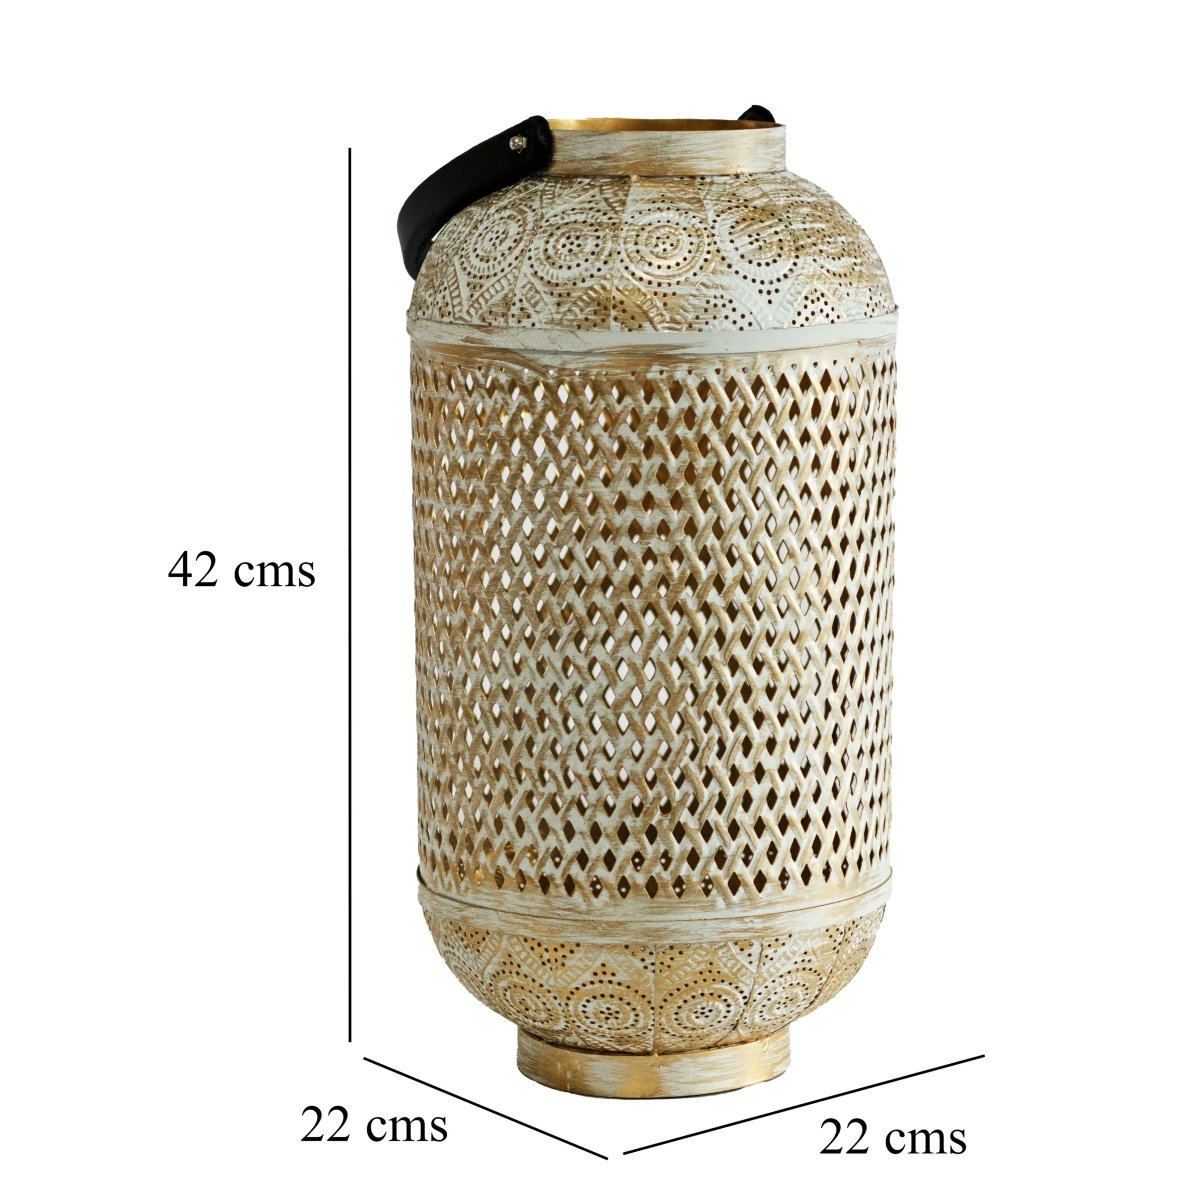 Kezevel Metal Table Decor Lantern - Hand Carved Golden and White Finish Decorative Candle Holder Lantern for Home Decor